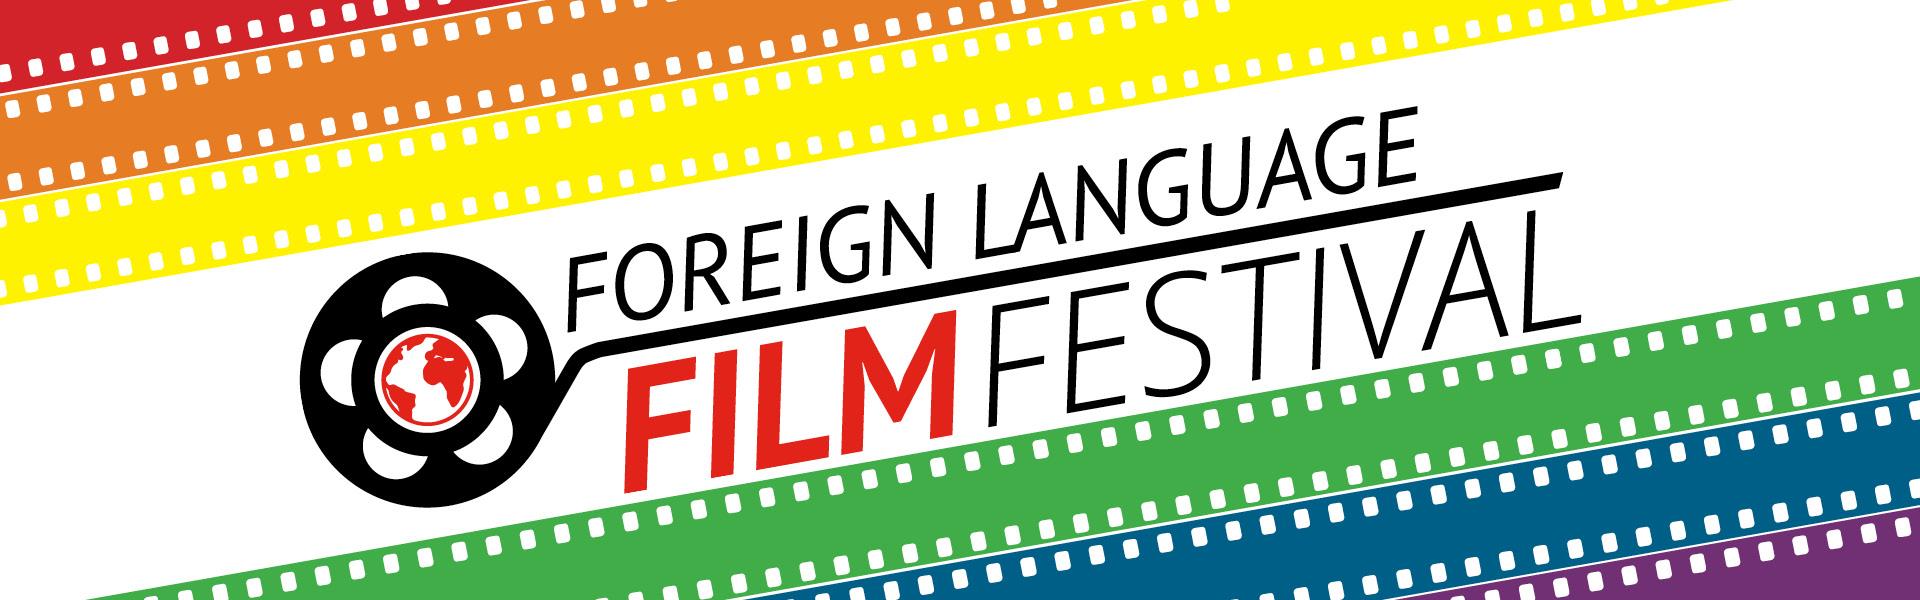 Long Beach Foreign Language Film Festival Banner